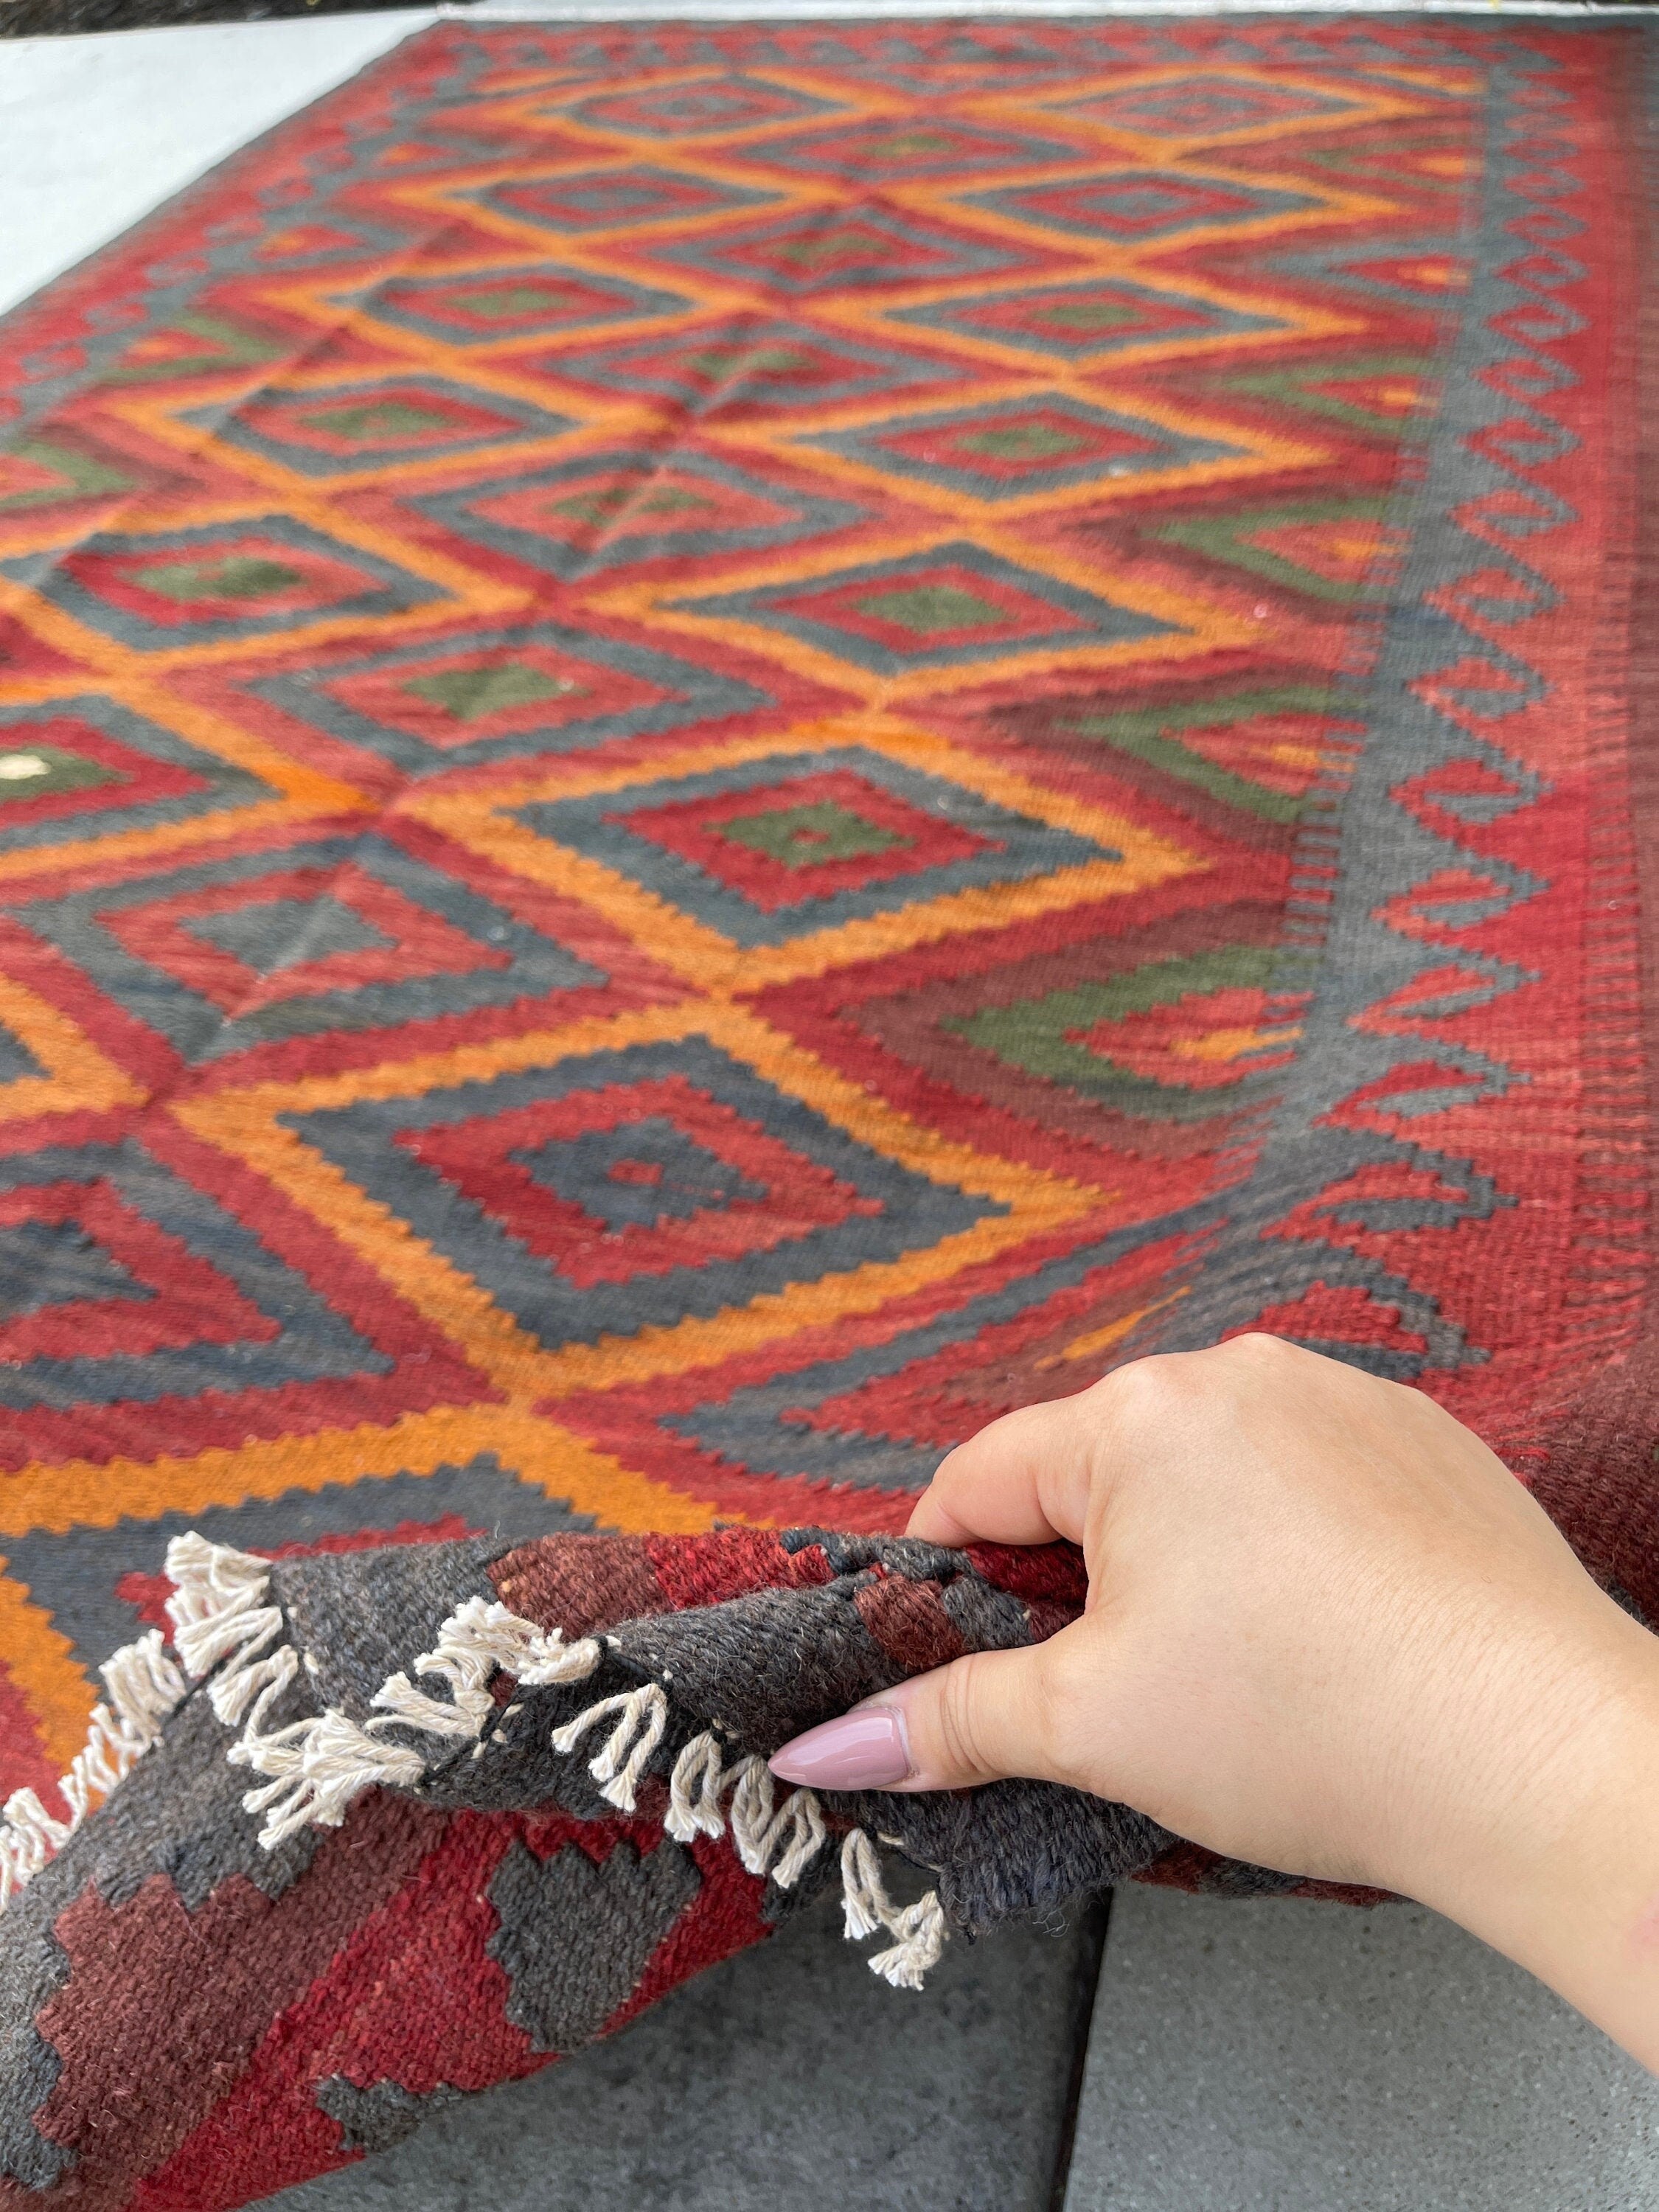 5x8 (150x245) Handmade Afghan Kilim Rug | Red Indigo Orange Pine Green Brown | Hand Knotted Tribal Nomadic Turkish Moroccan Kilim Wool